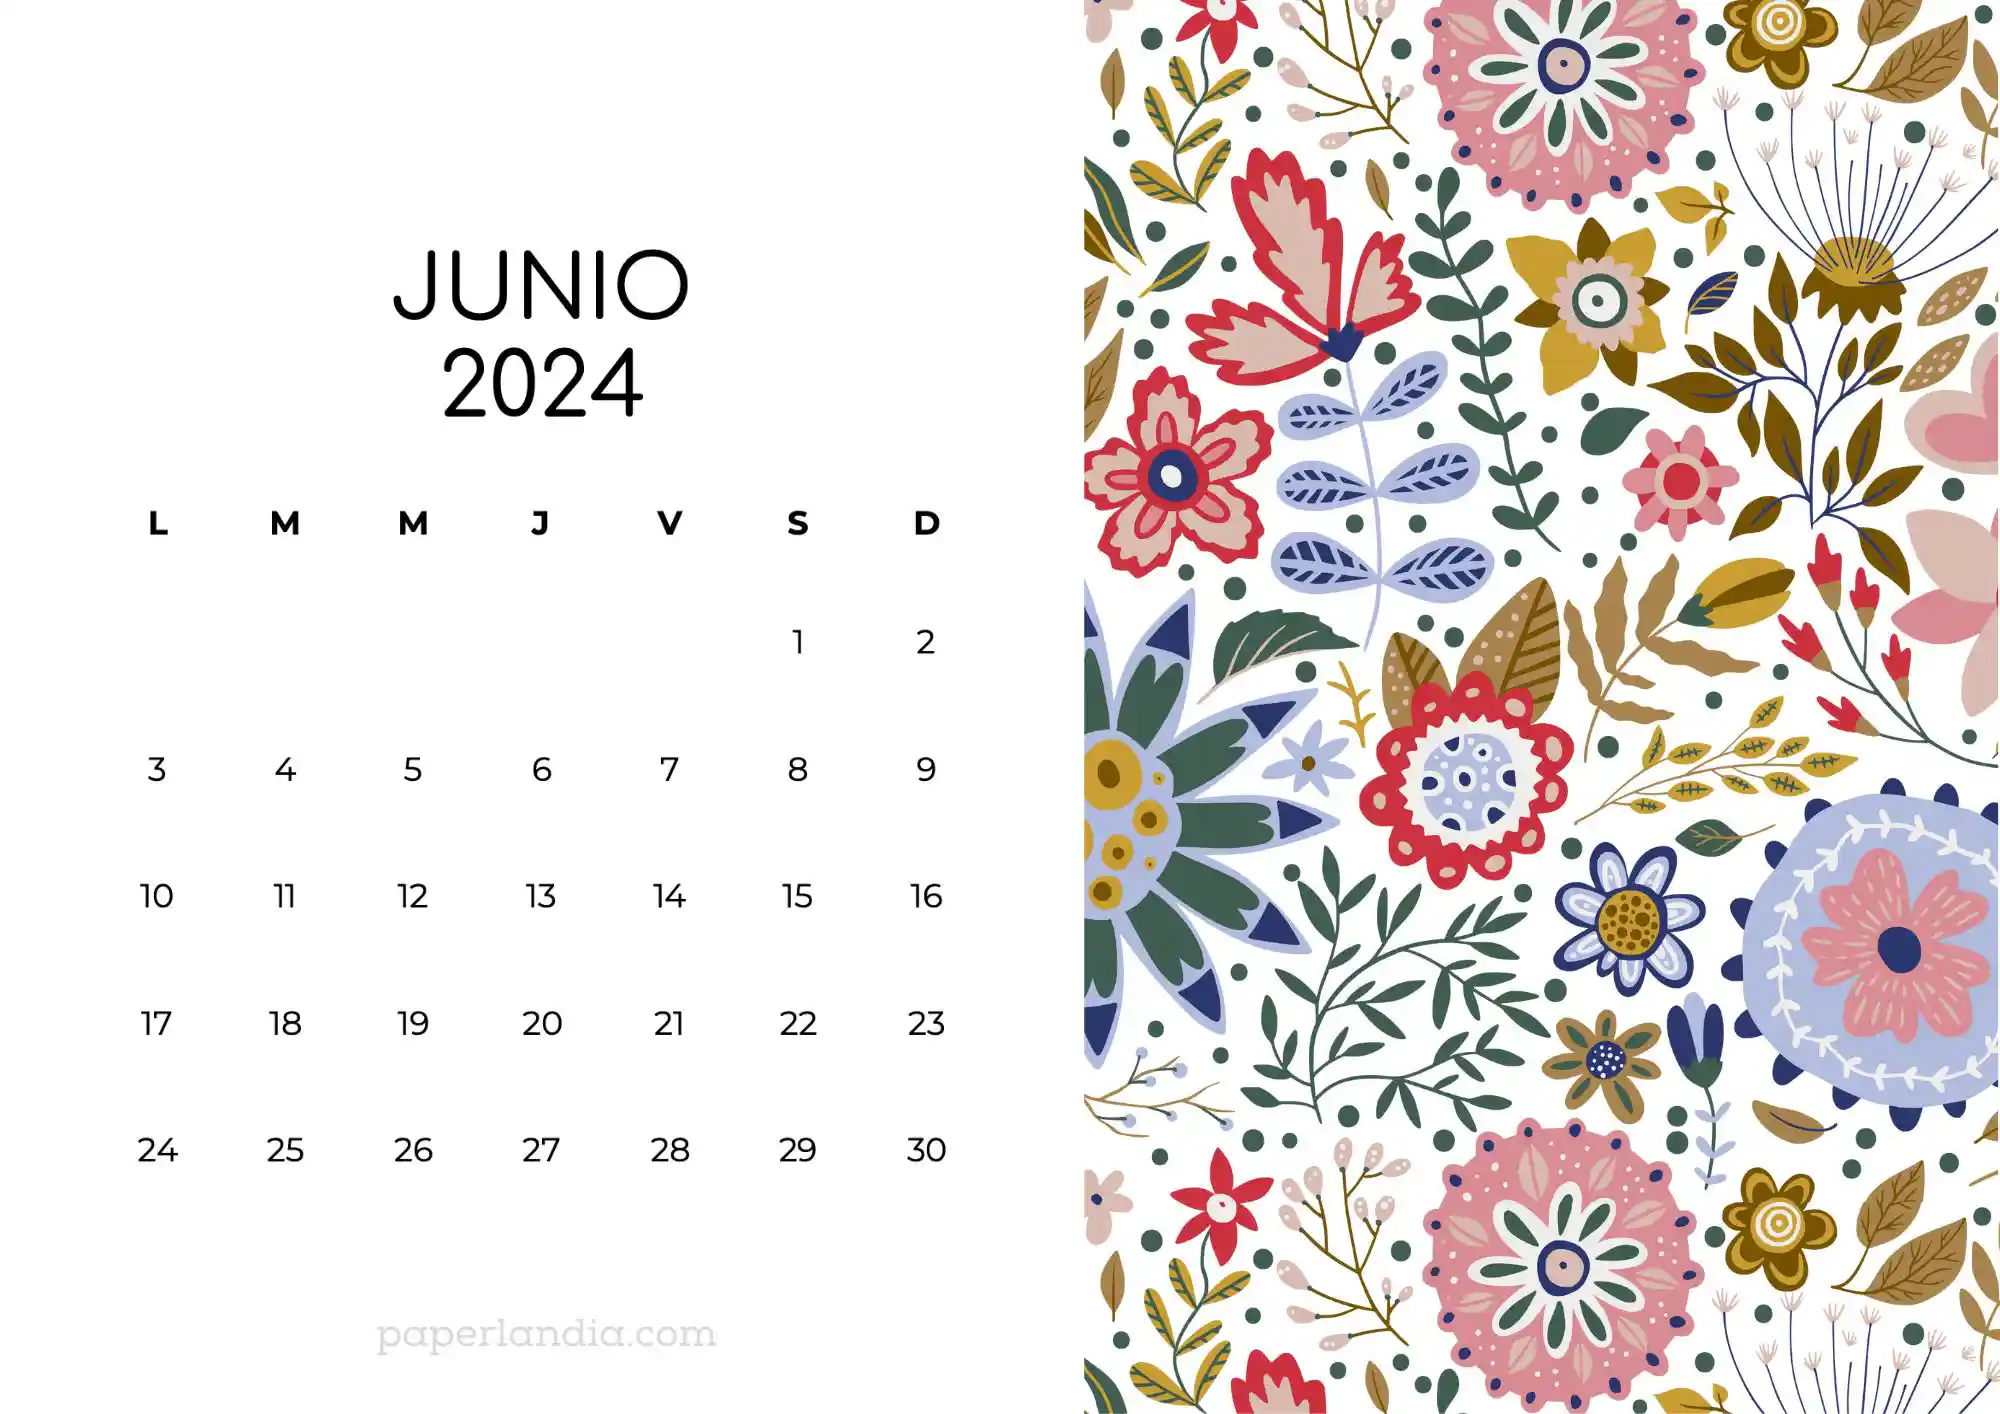 Calendario junio 2024 horizontal con flores escandinavas fondo blanco